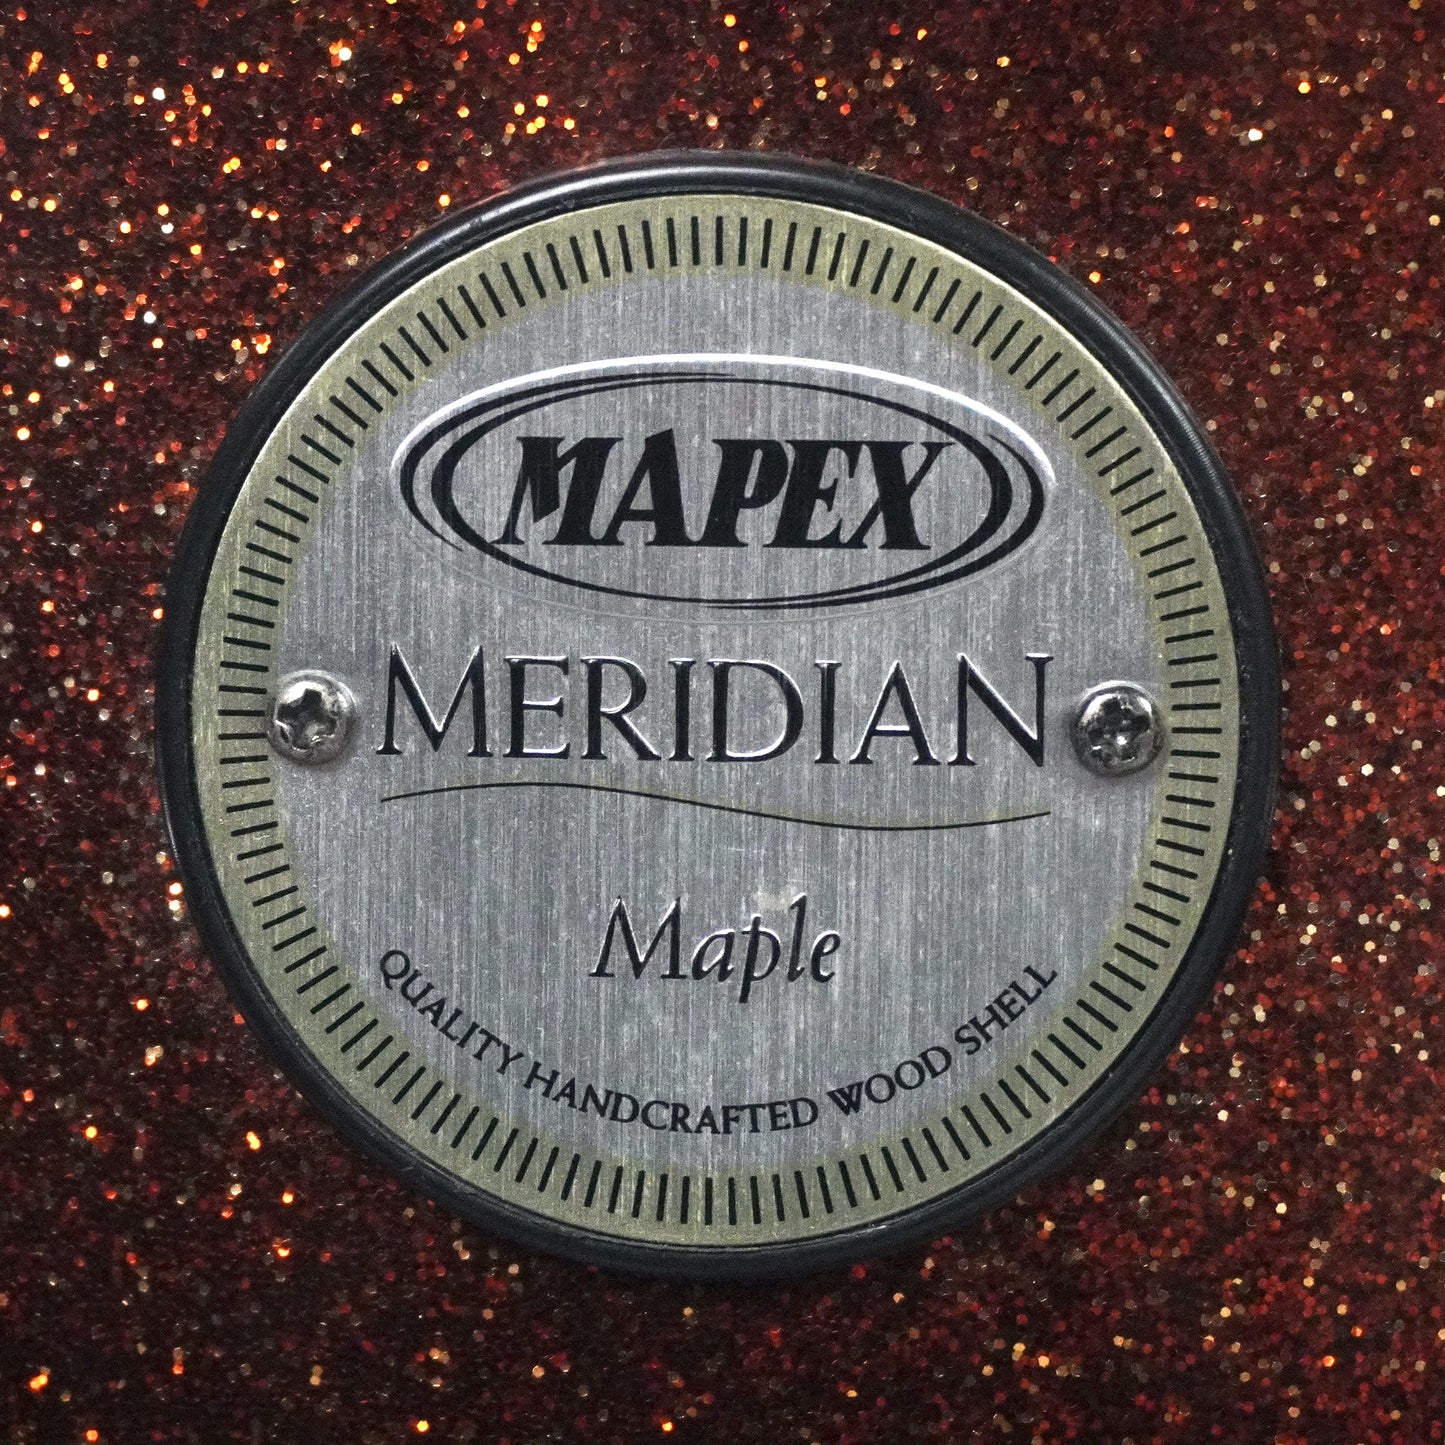 Mapex Meridian Maple 5-Piece in Root Beer Burst including Hardware